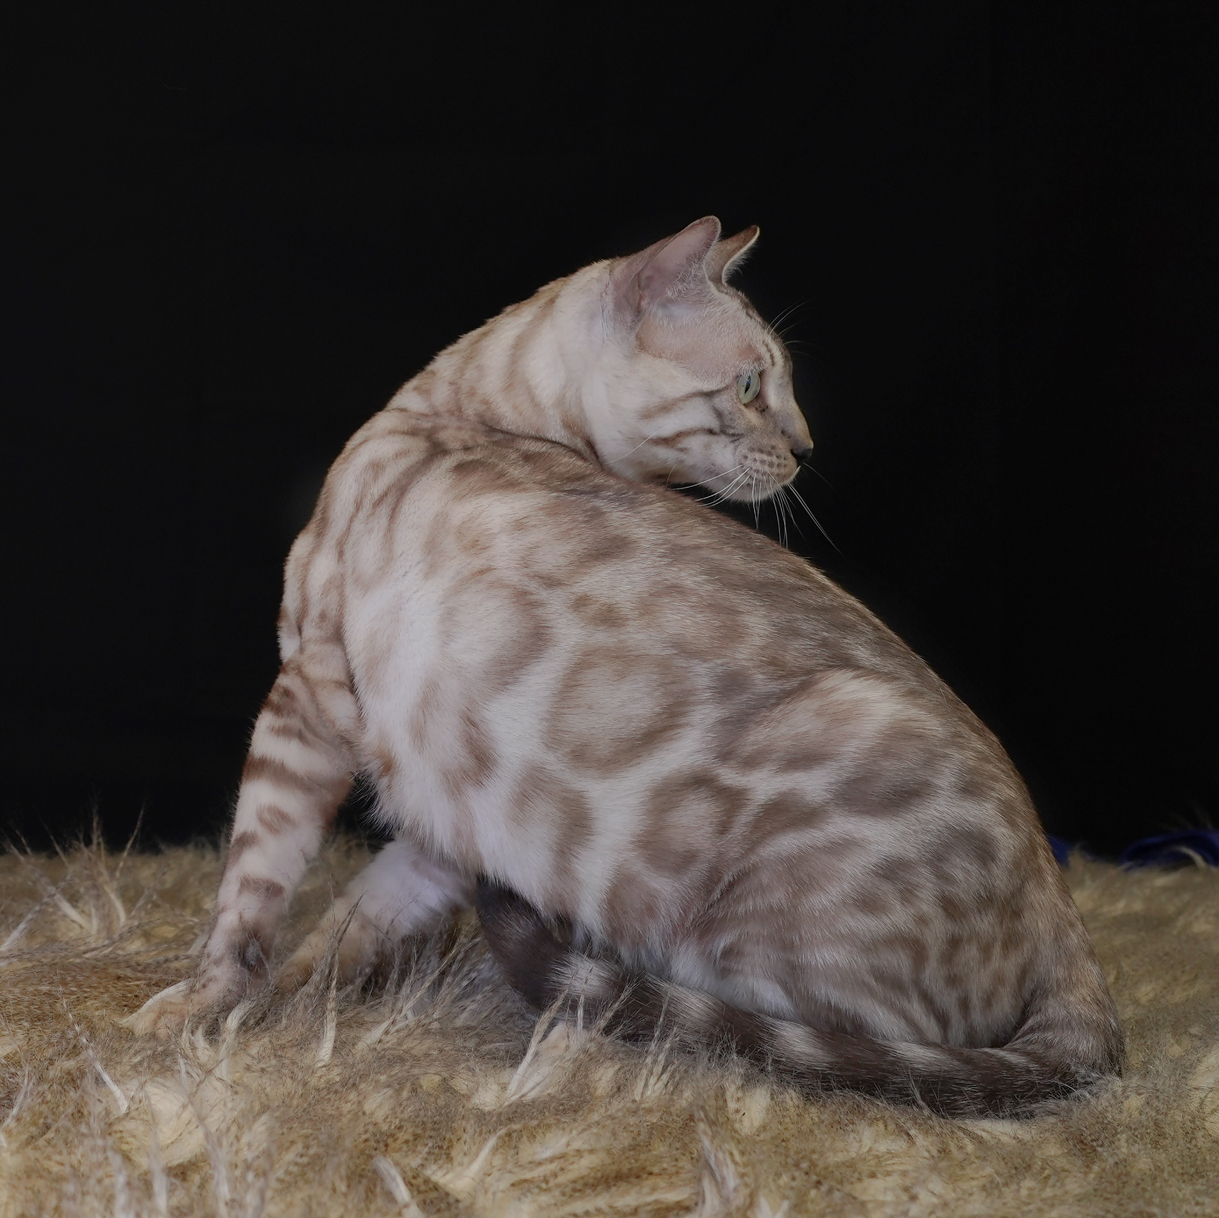 Bengal Cat-Ashmiyah Wild Styles